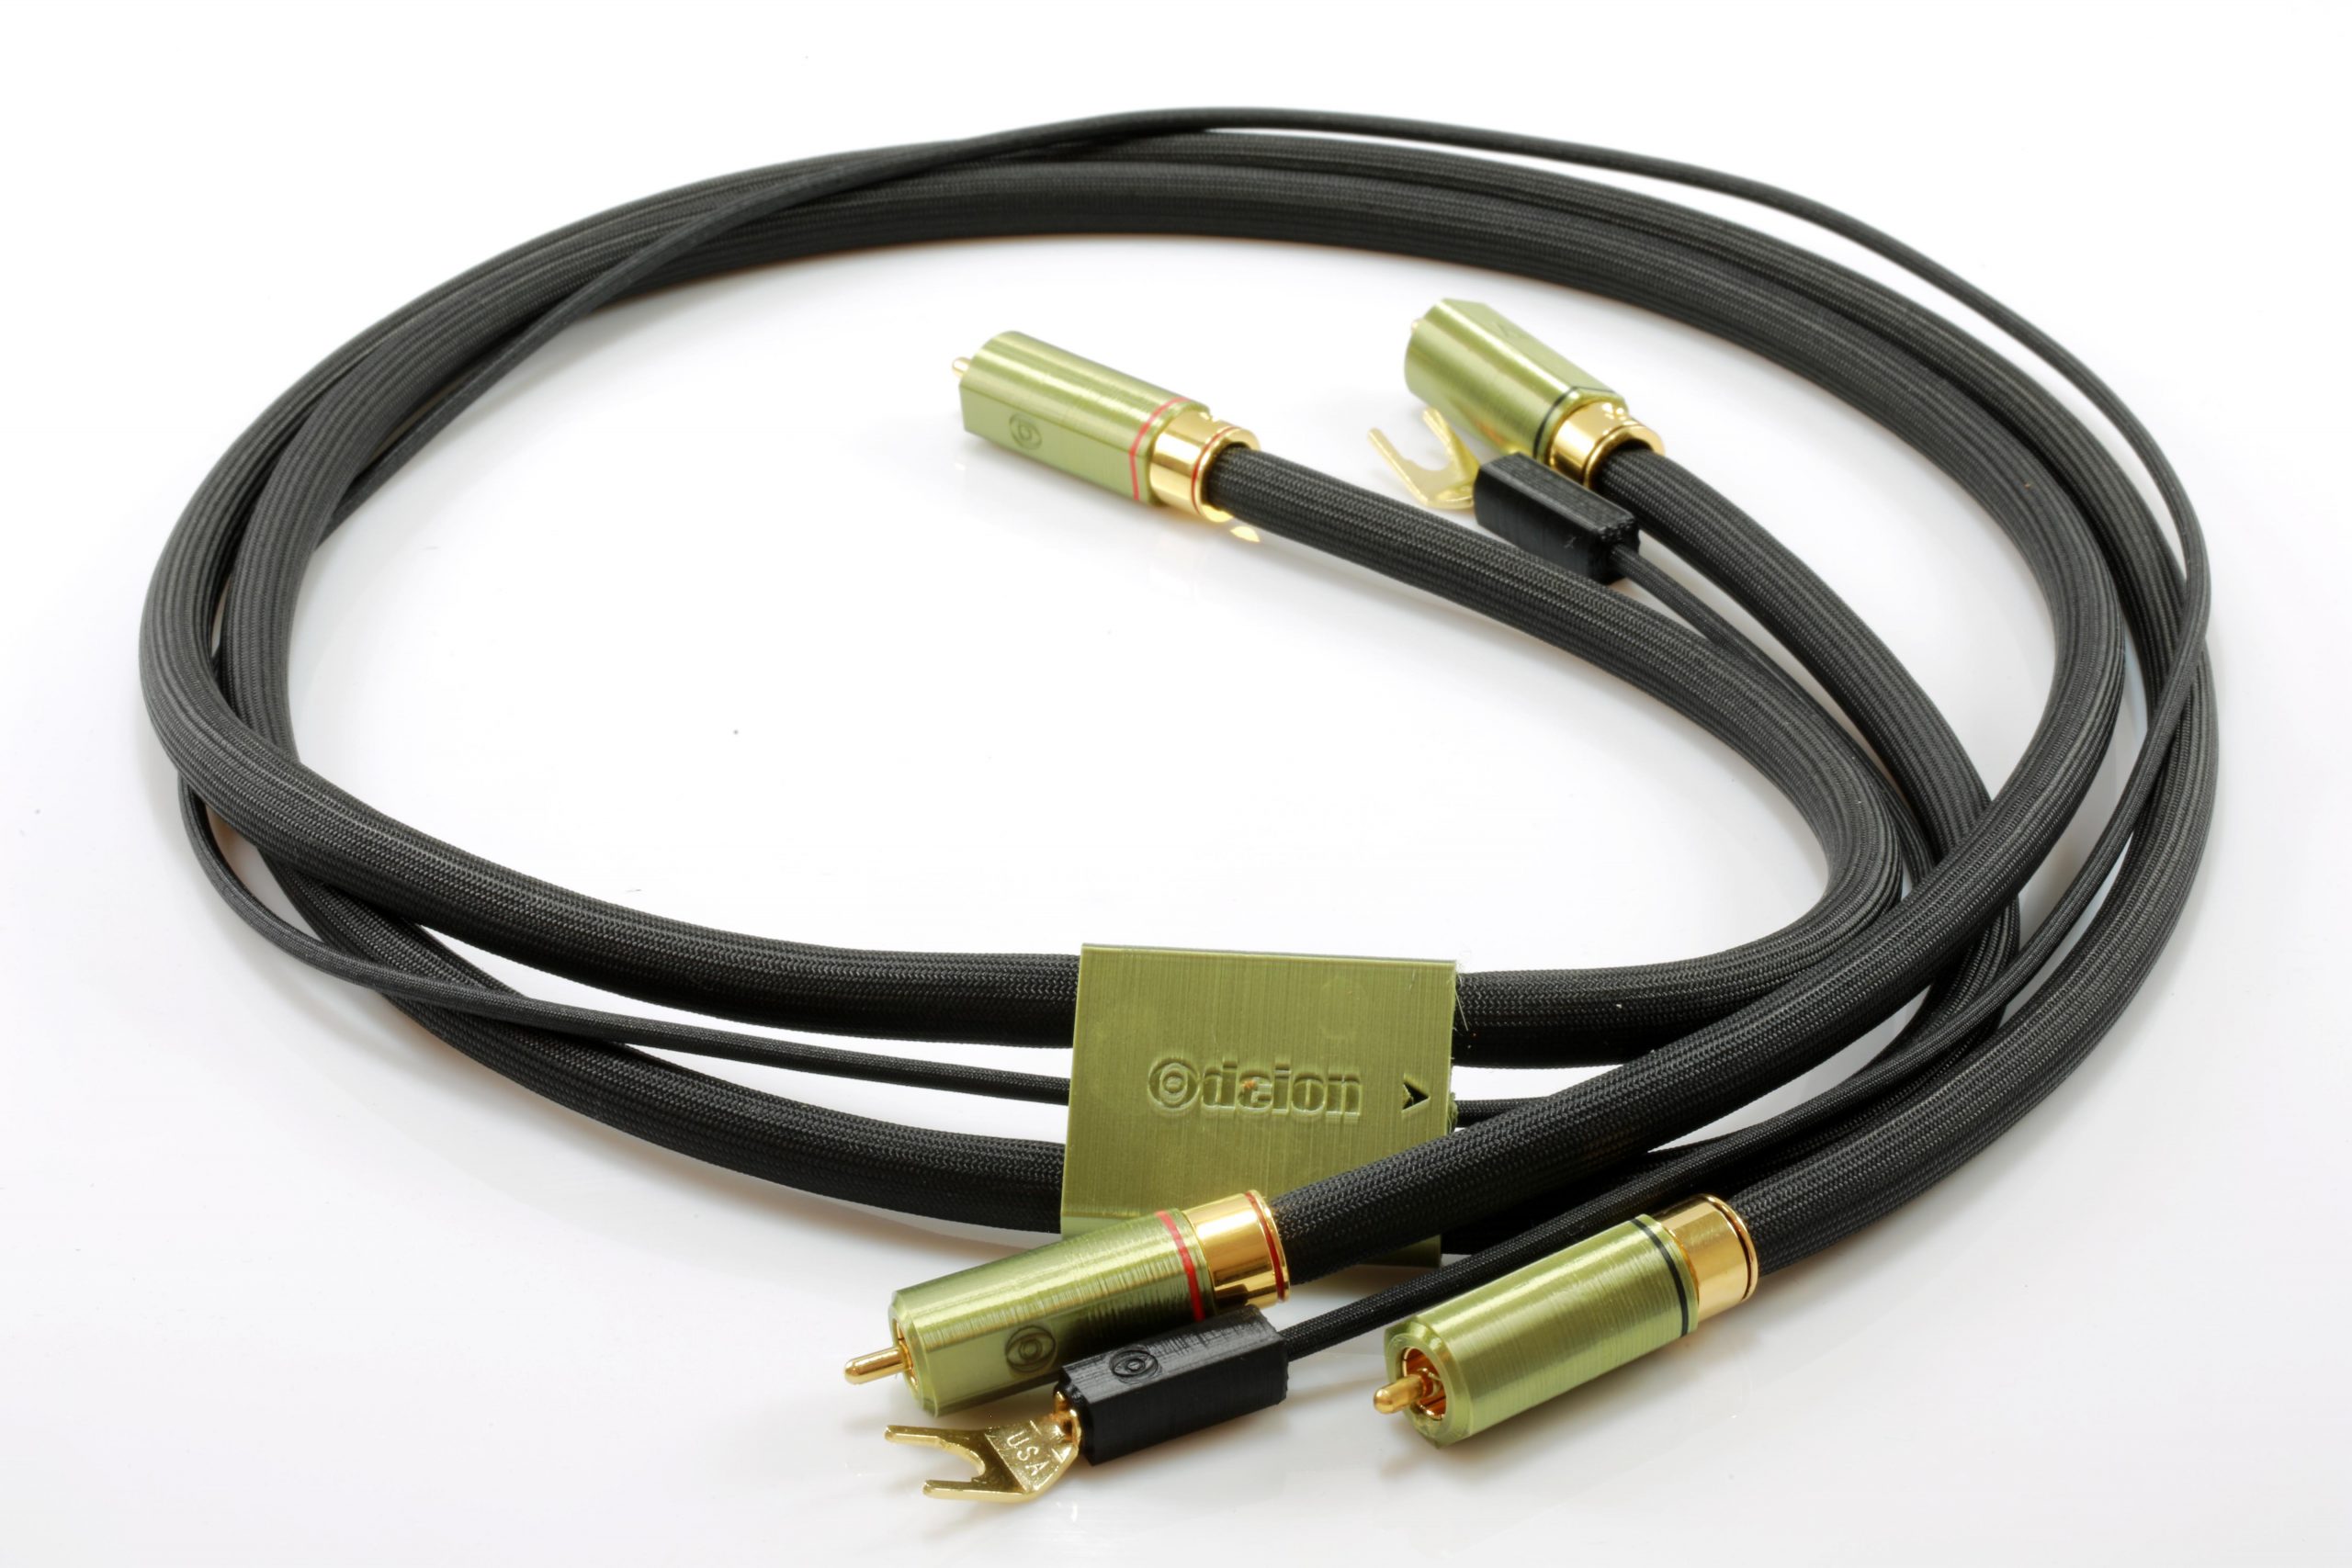 Delta Phono RCA Odeion Cables